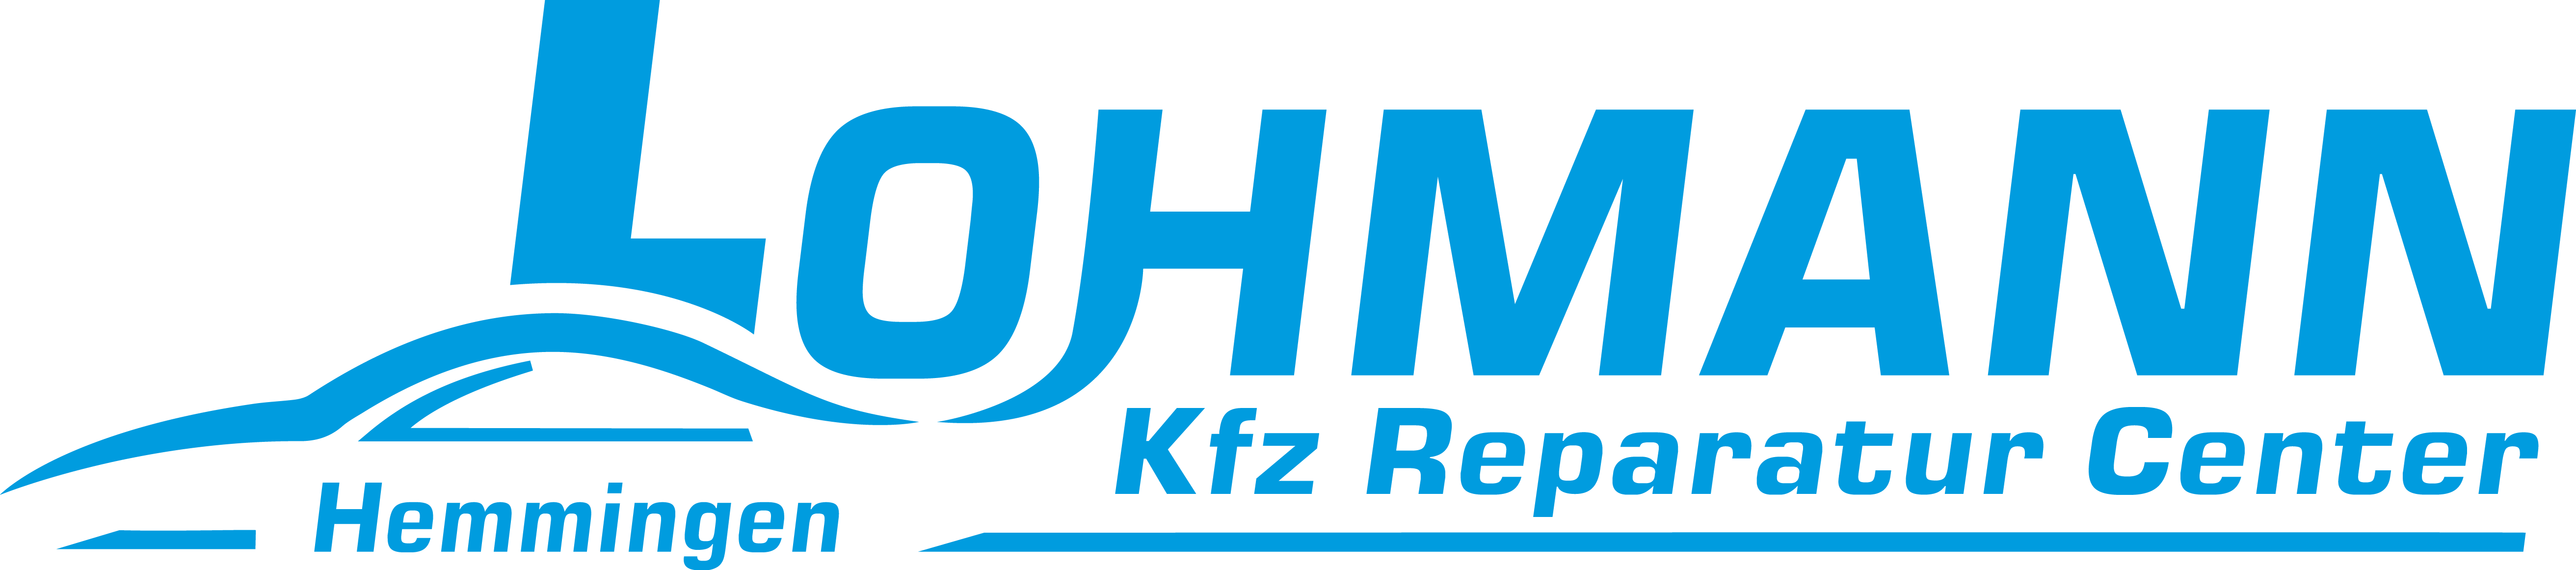 Kfz-Reparatur-Center in Hemmingen